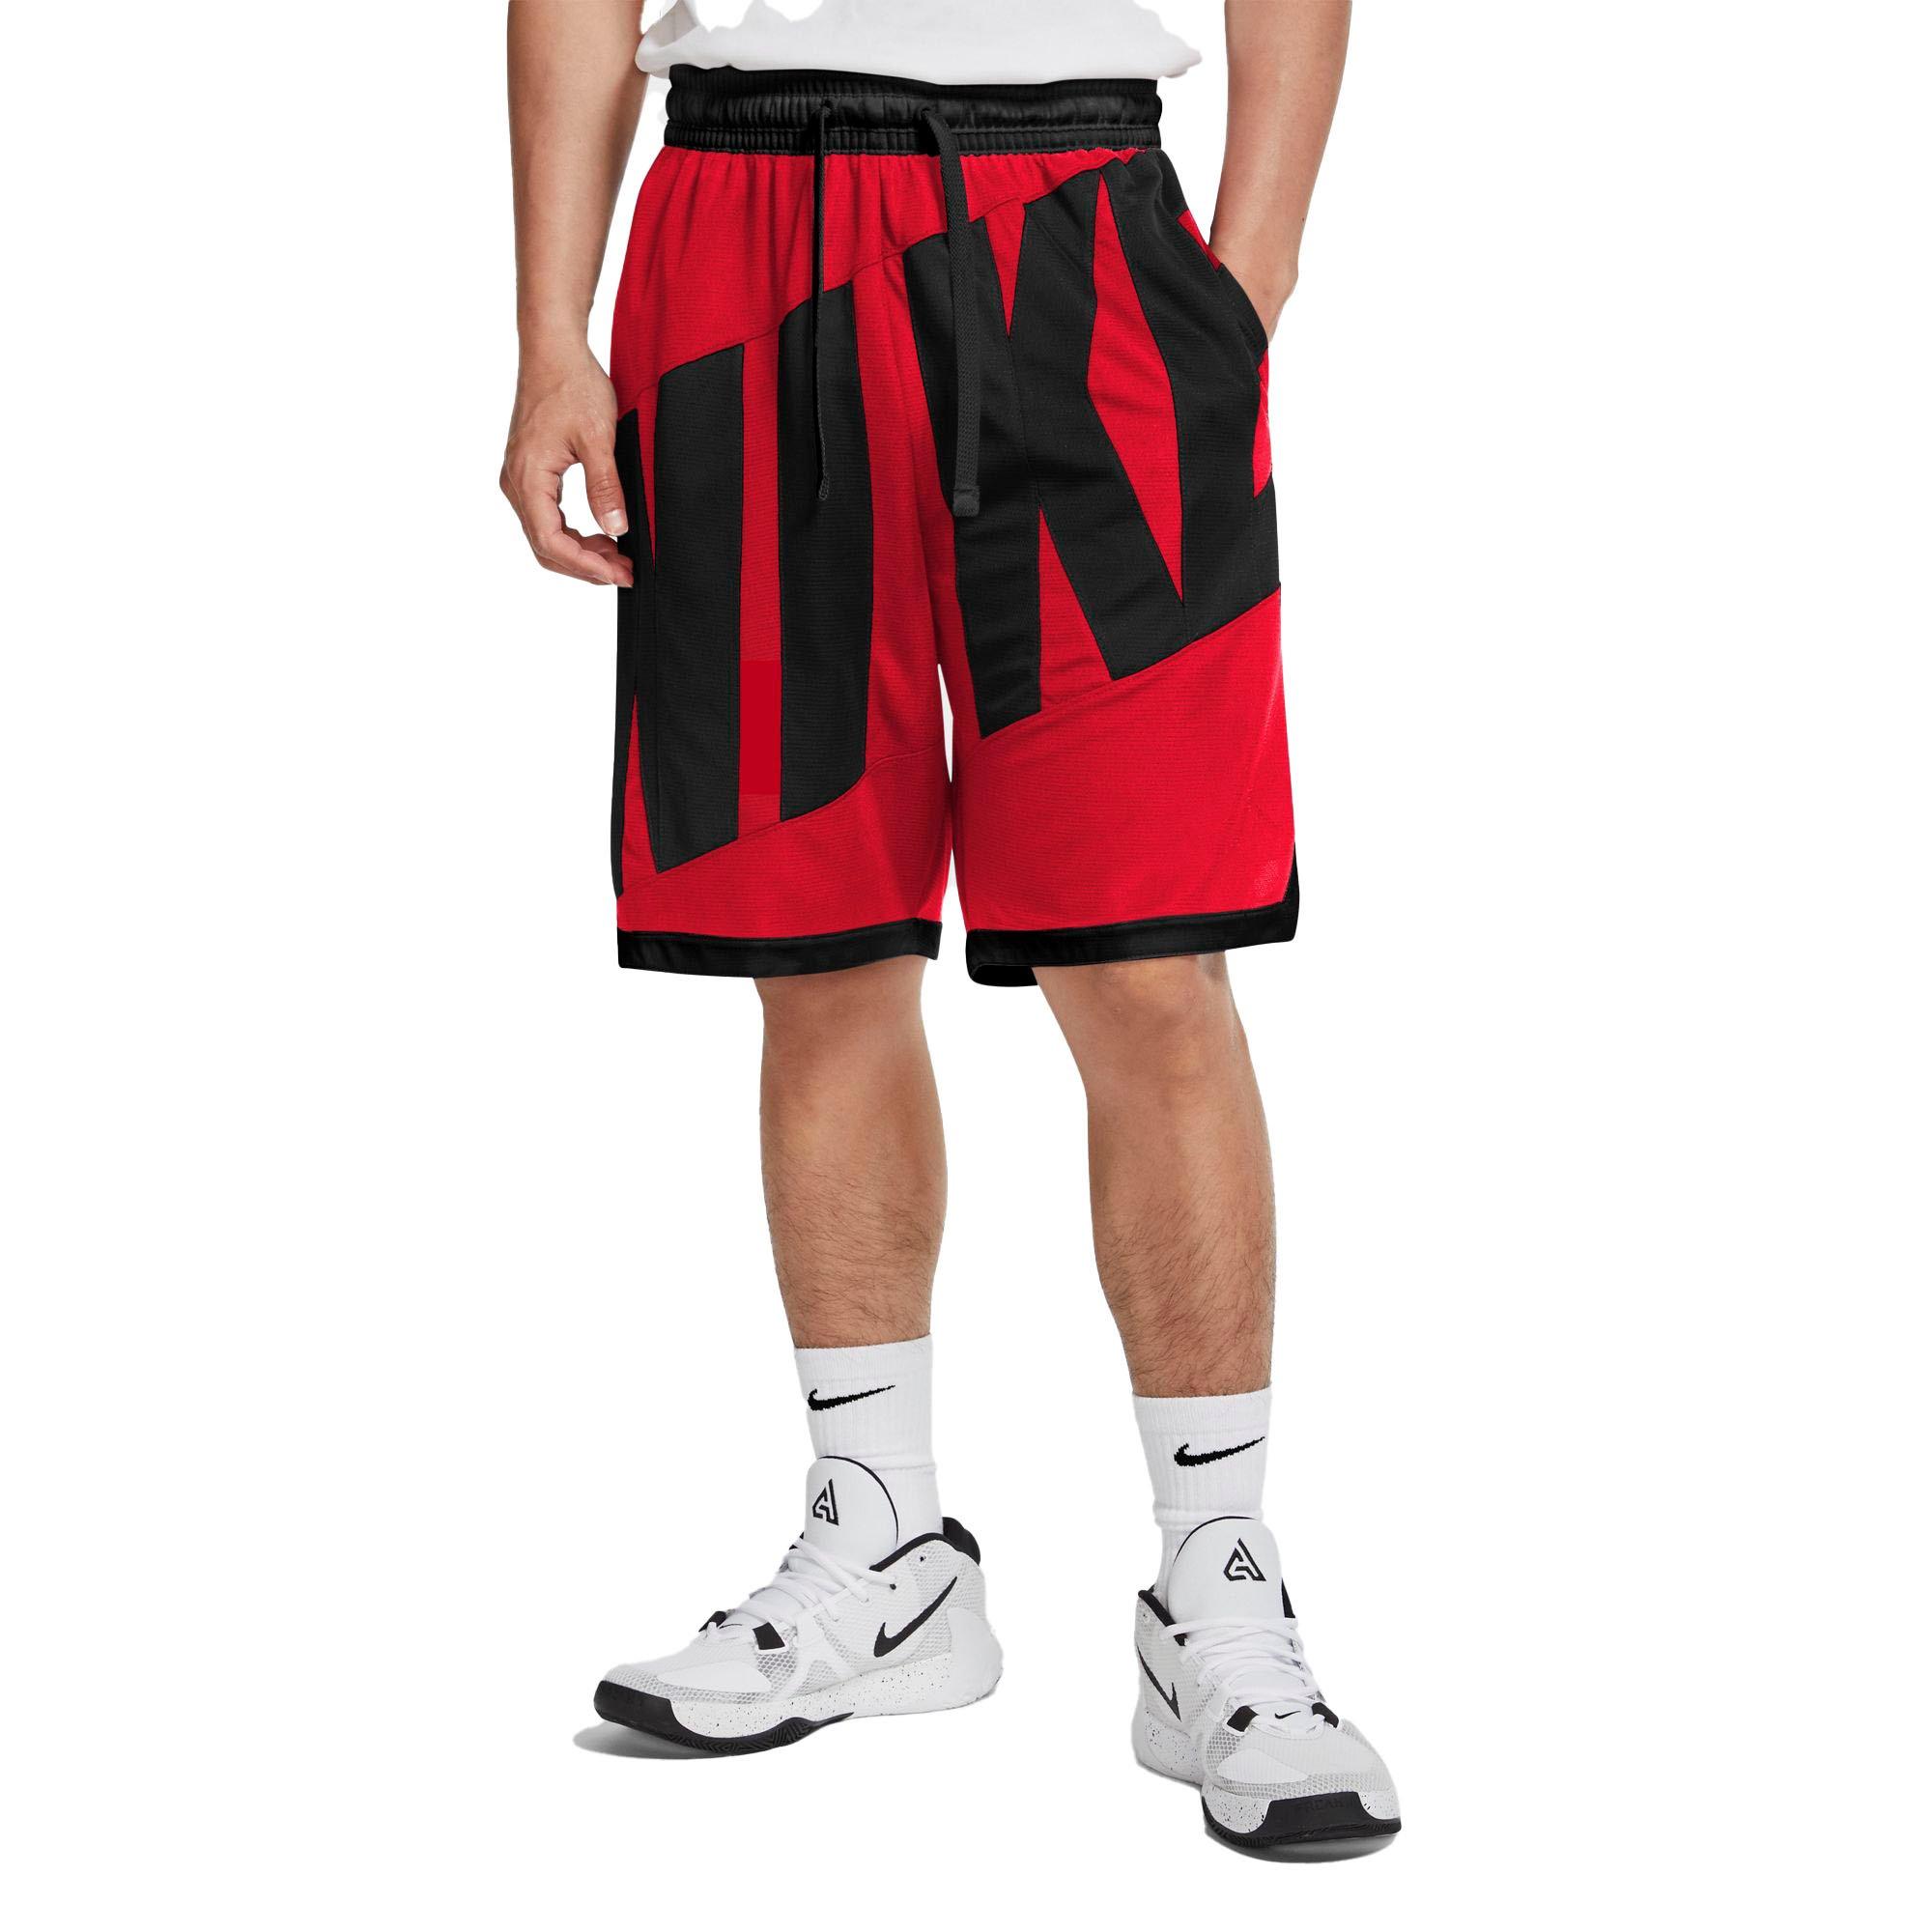 hibbett sports basketball shorts